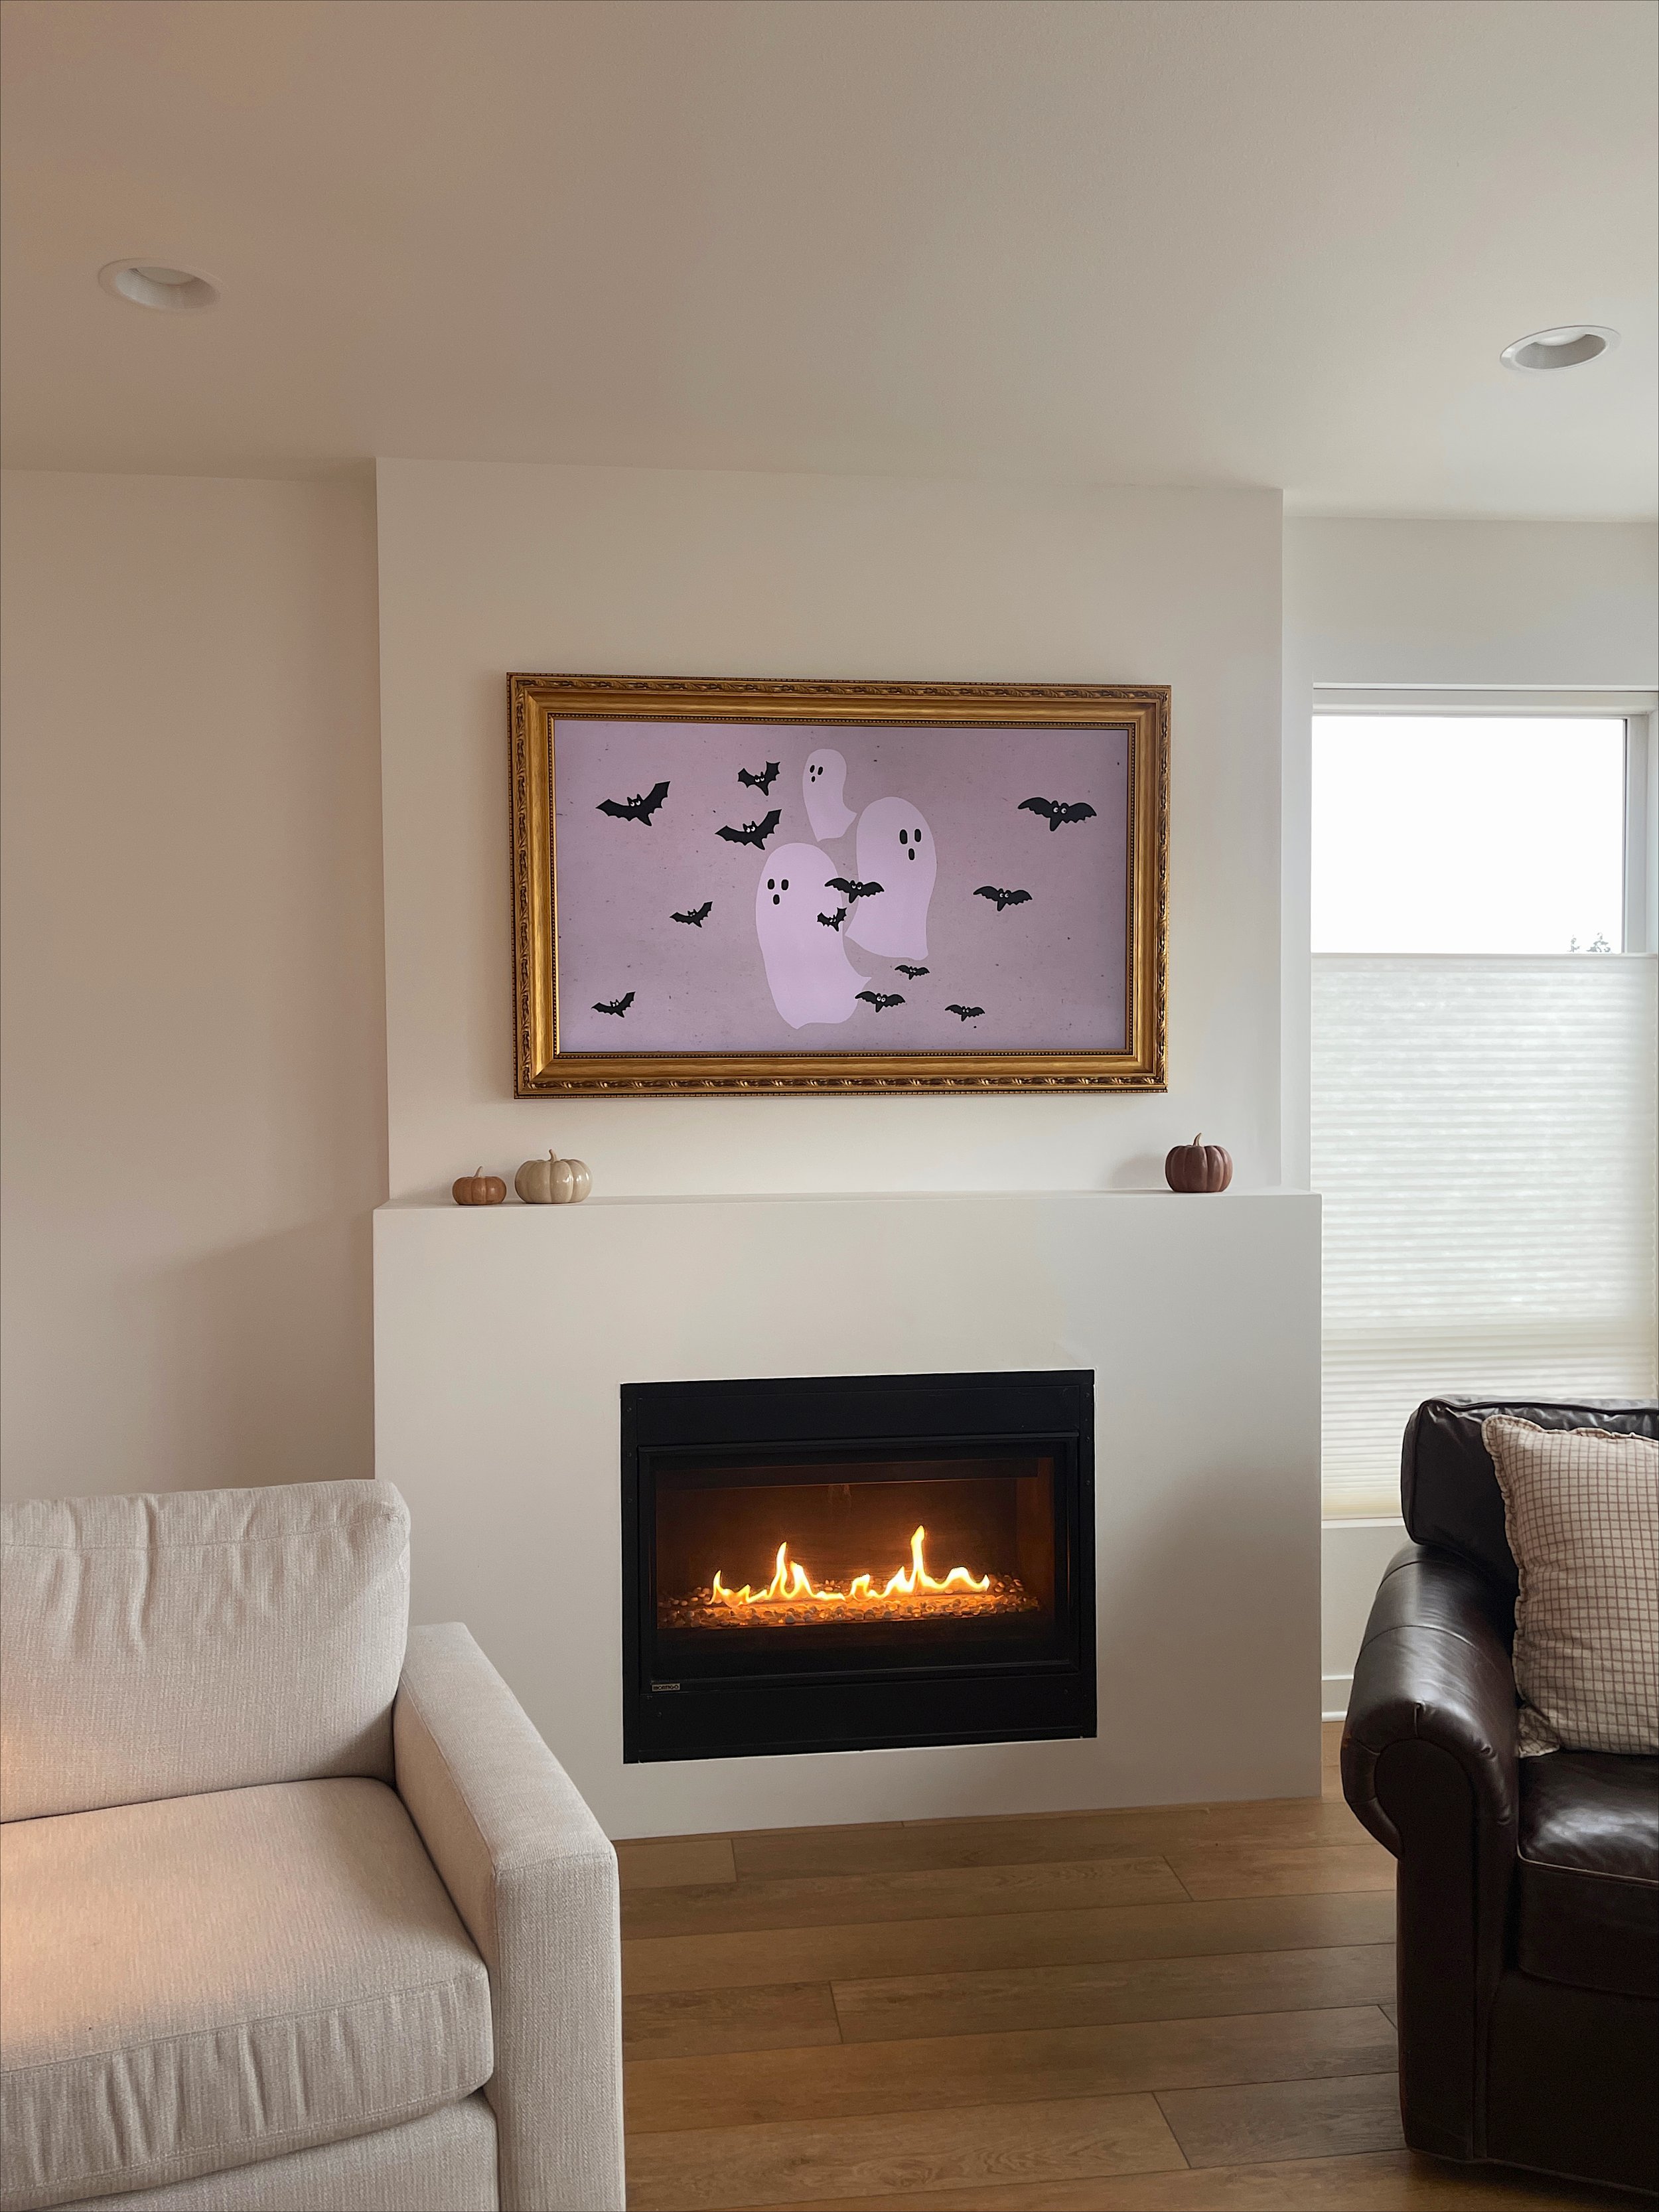 Frame TV Fall Artwork - Spooky Ghost, Fireplace, Home Renovation, Home Inspo - Bre Sheppard.JPG